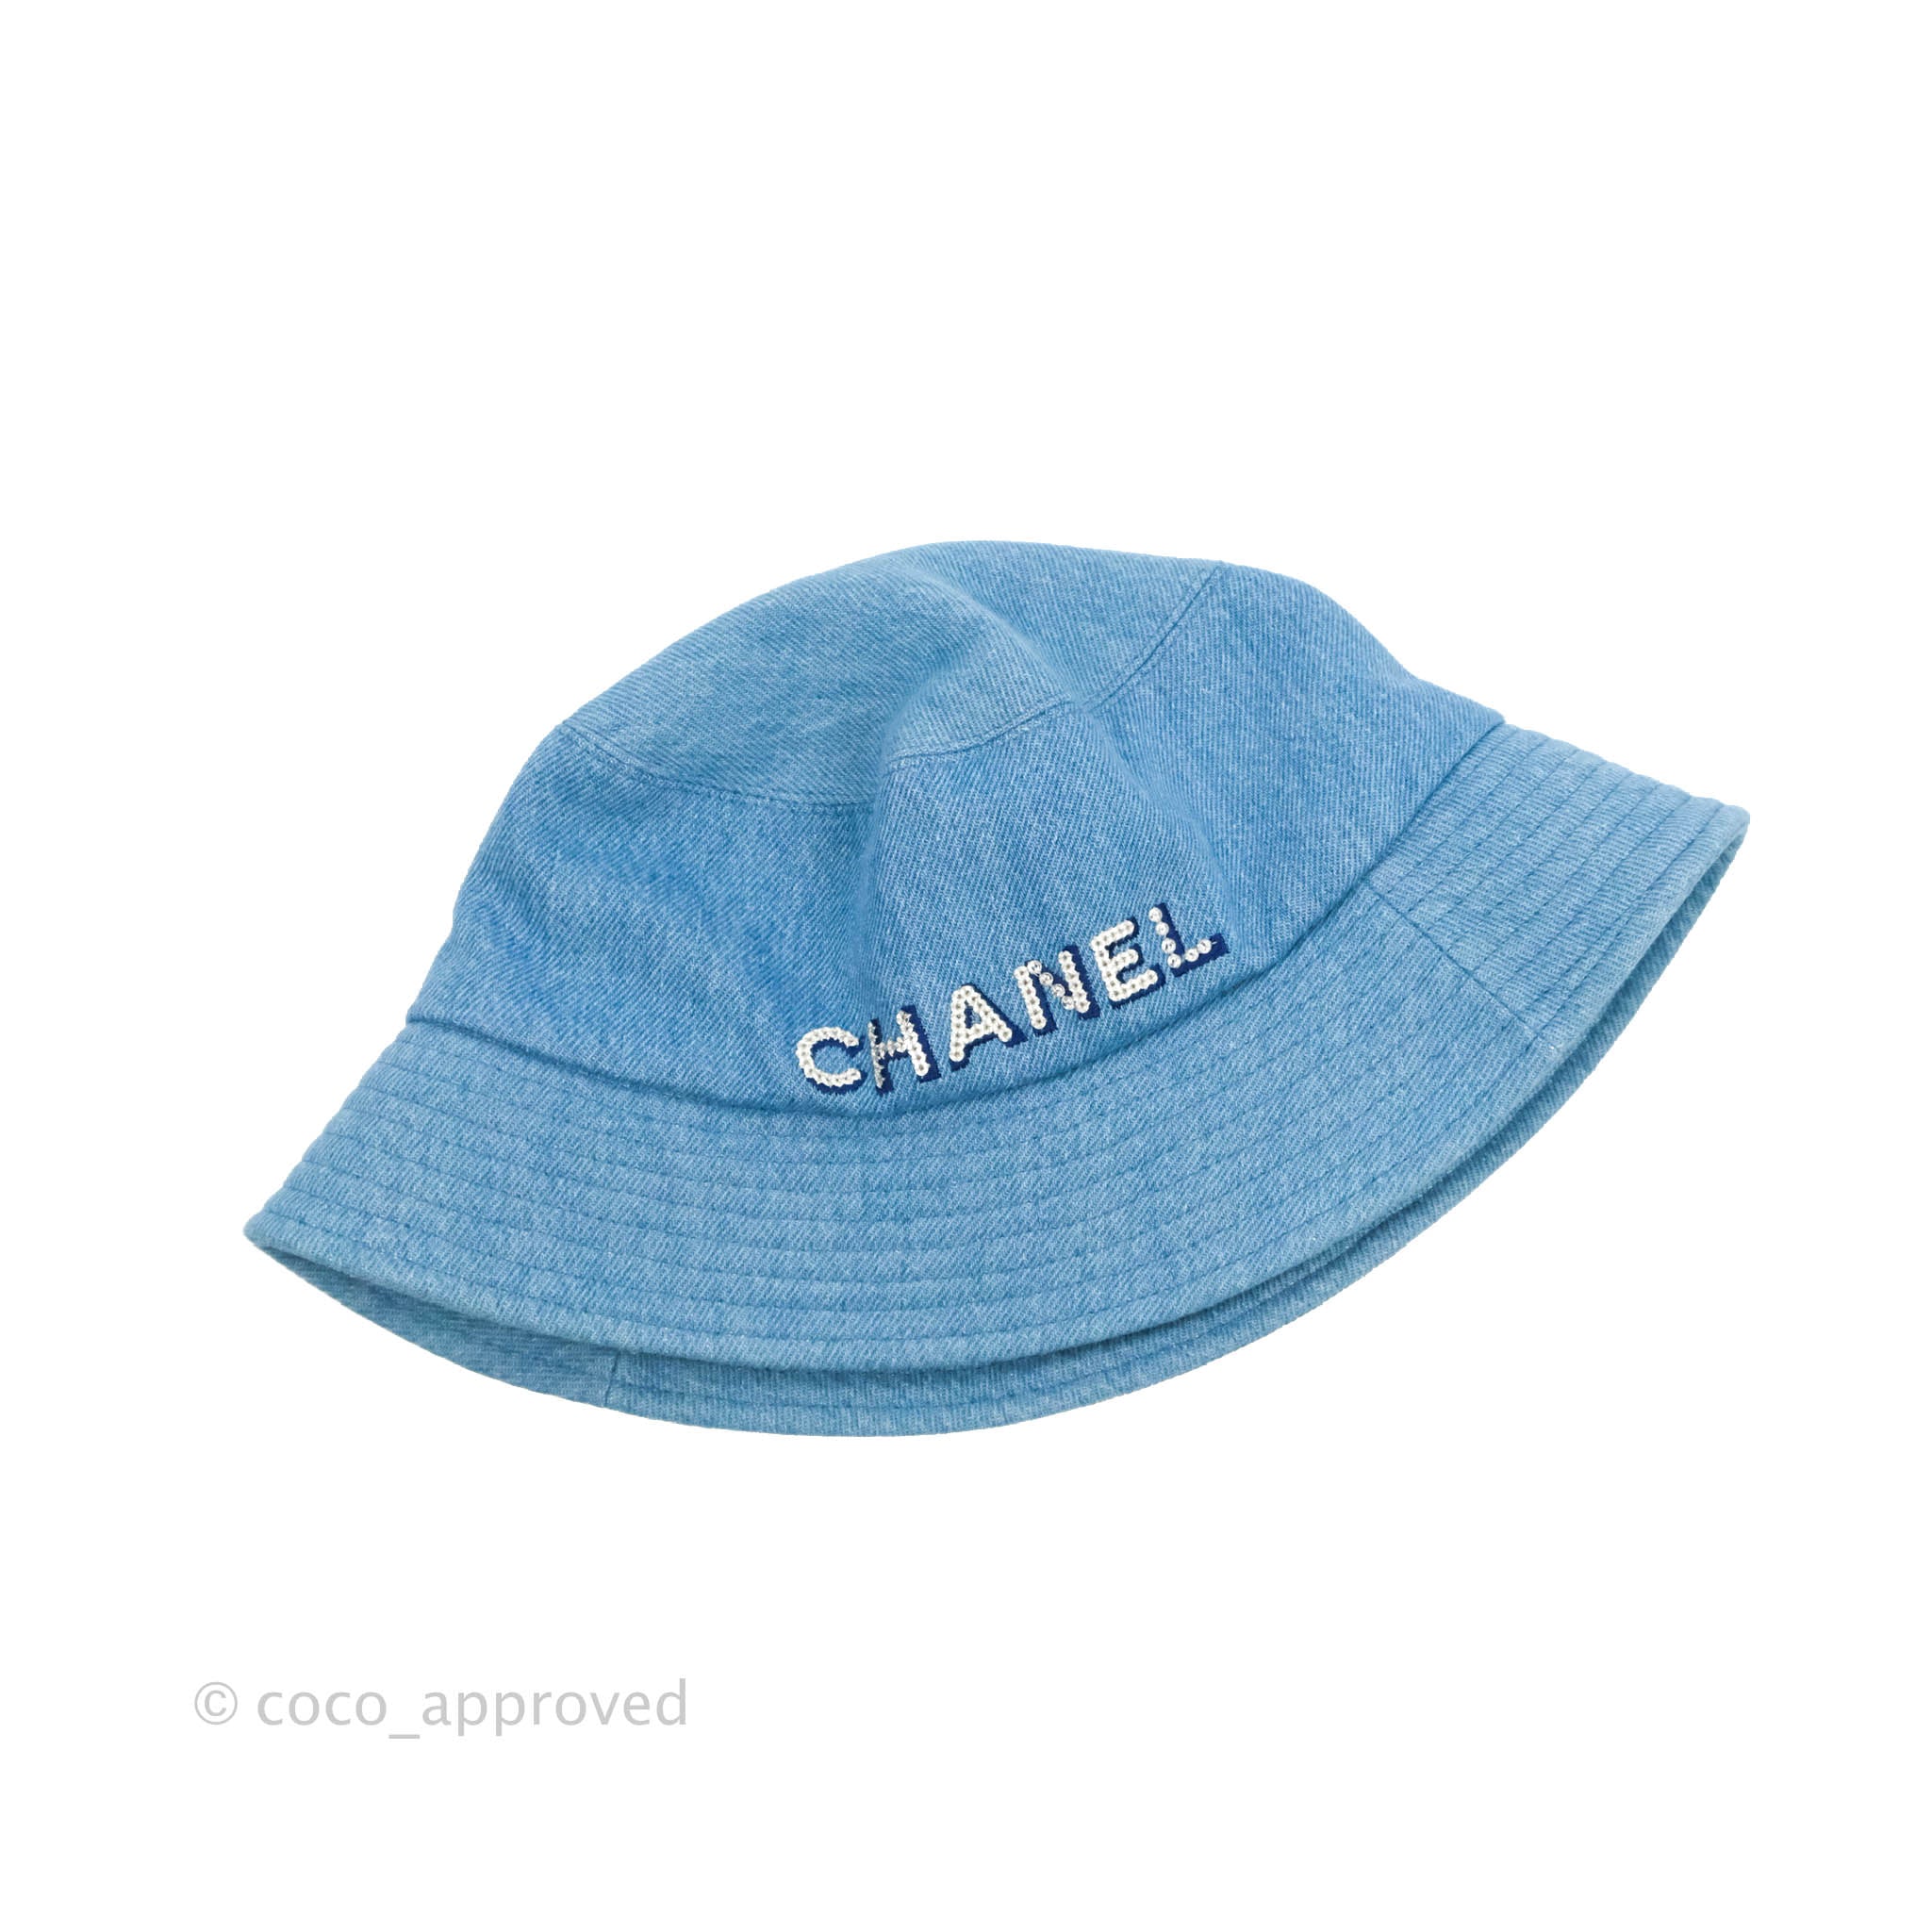 Chanel Denim & Sequin Bucket Hat, Size Small, New GA001 GA003